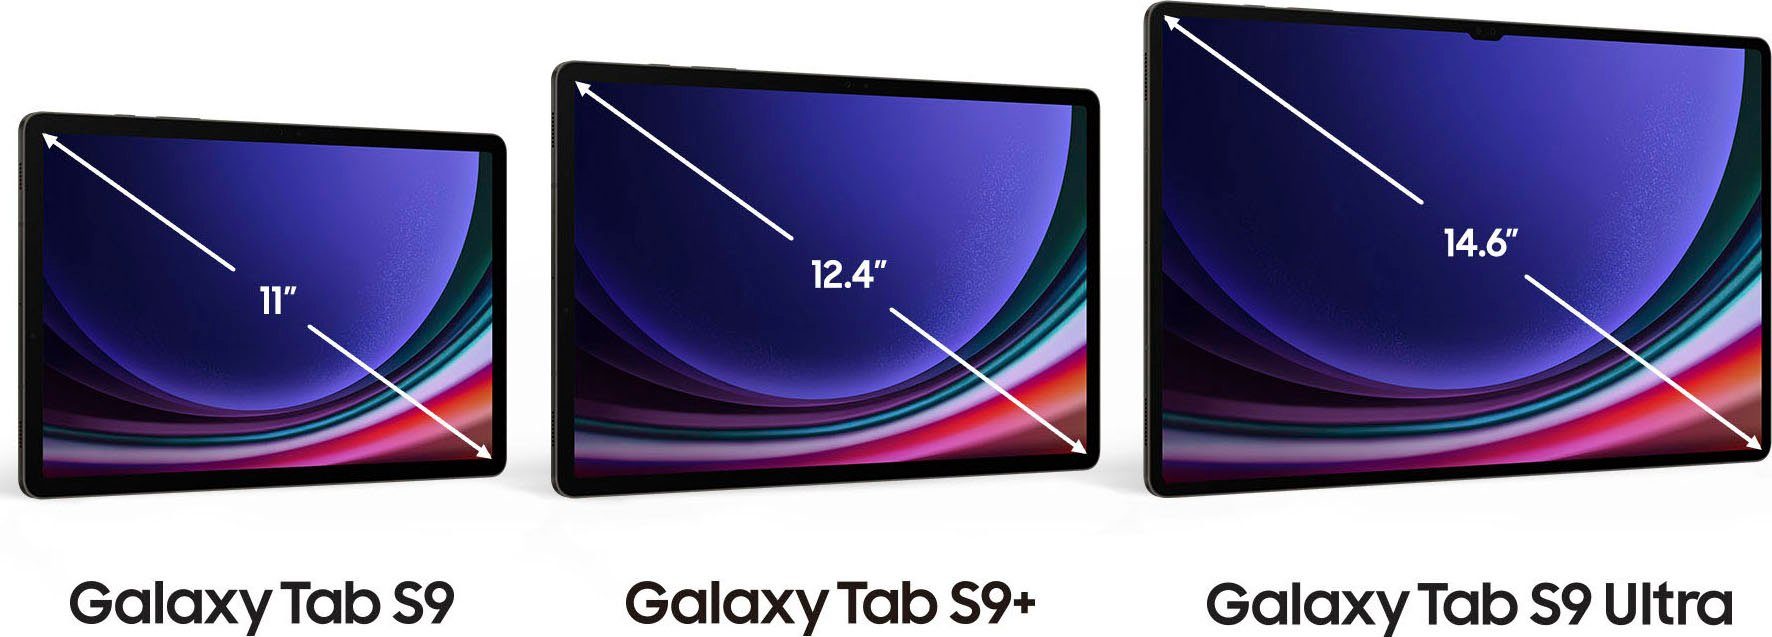 Android) S9+ 256 GB, Galaxy Beige Samsung Tab Tablet (12,4", WiFi